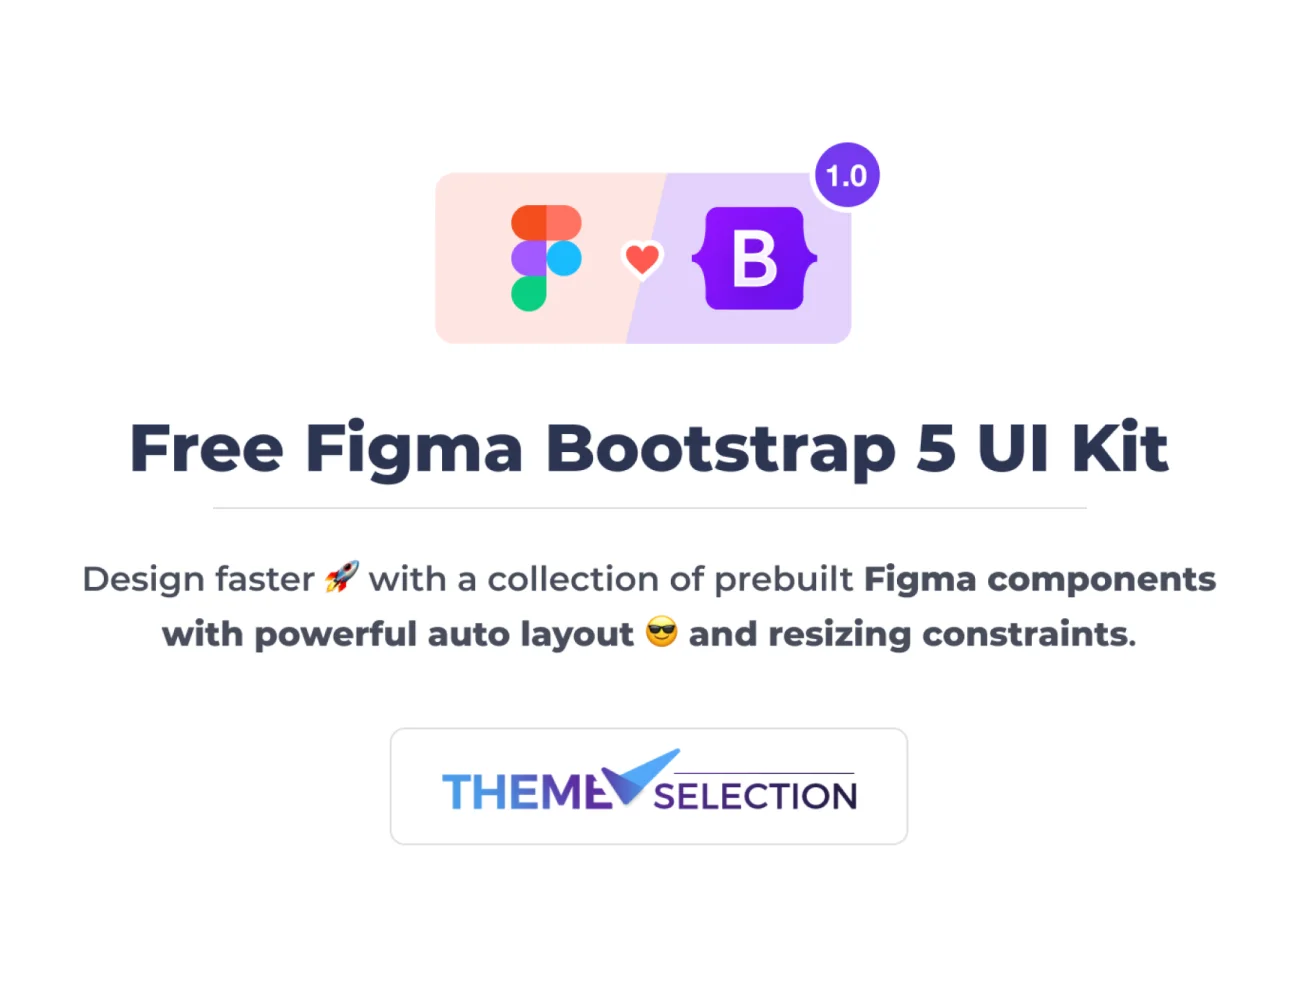 300个自适应组件动态响应 Figma Bootstrap 5 设计UI套件库 Free Figma Bootstrap 5 UI Kit插图1